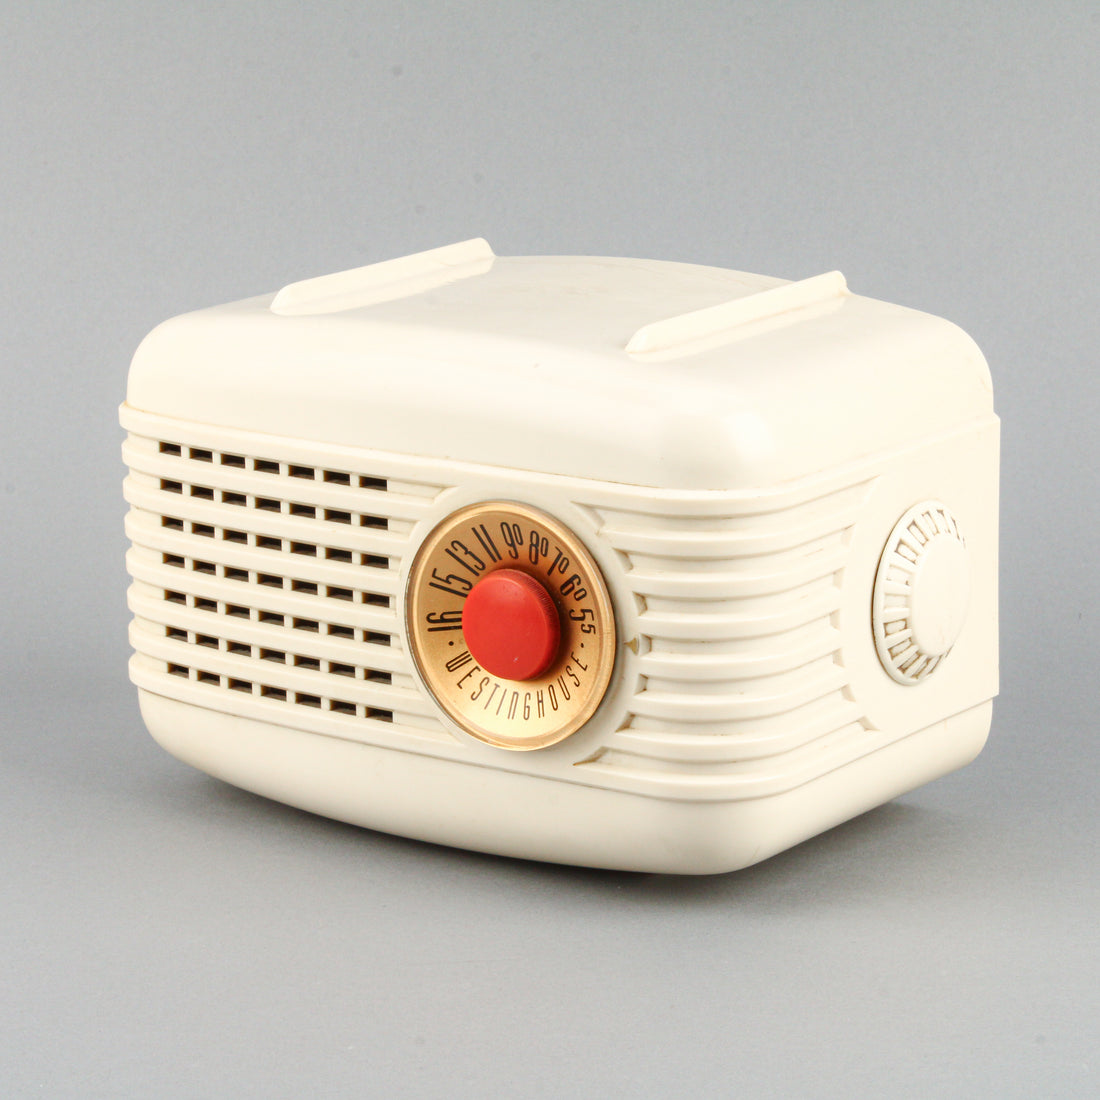 WESTINGHOUSE 501 Radio - Cream